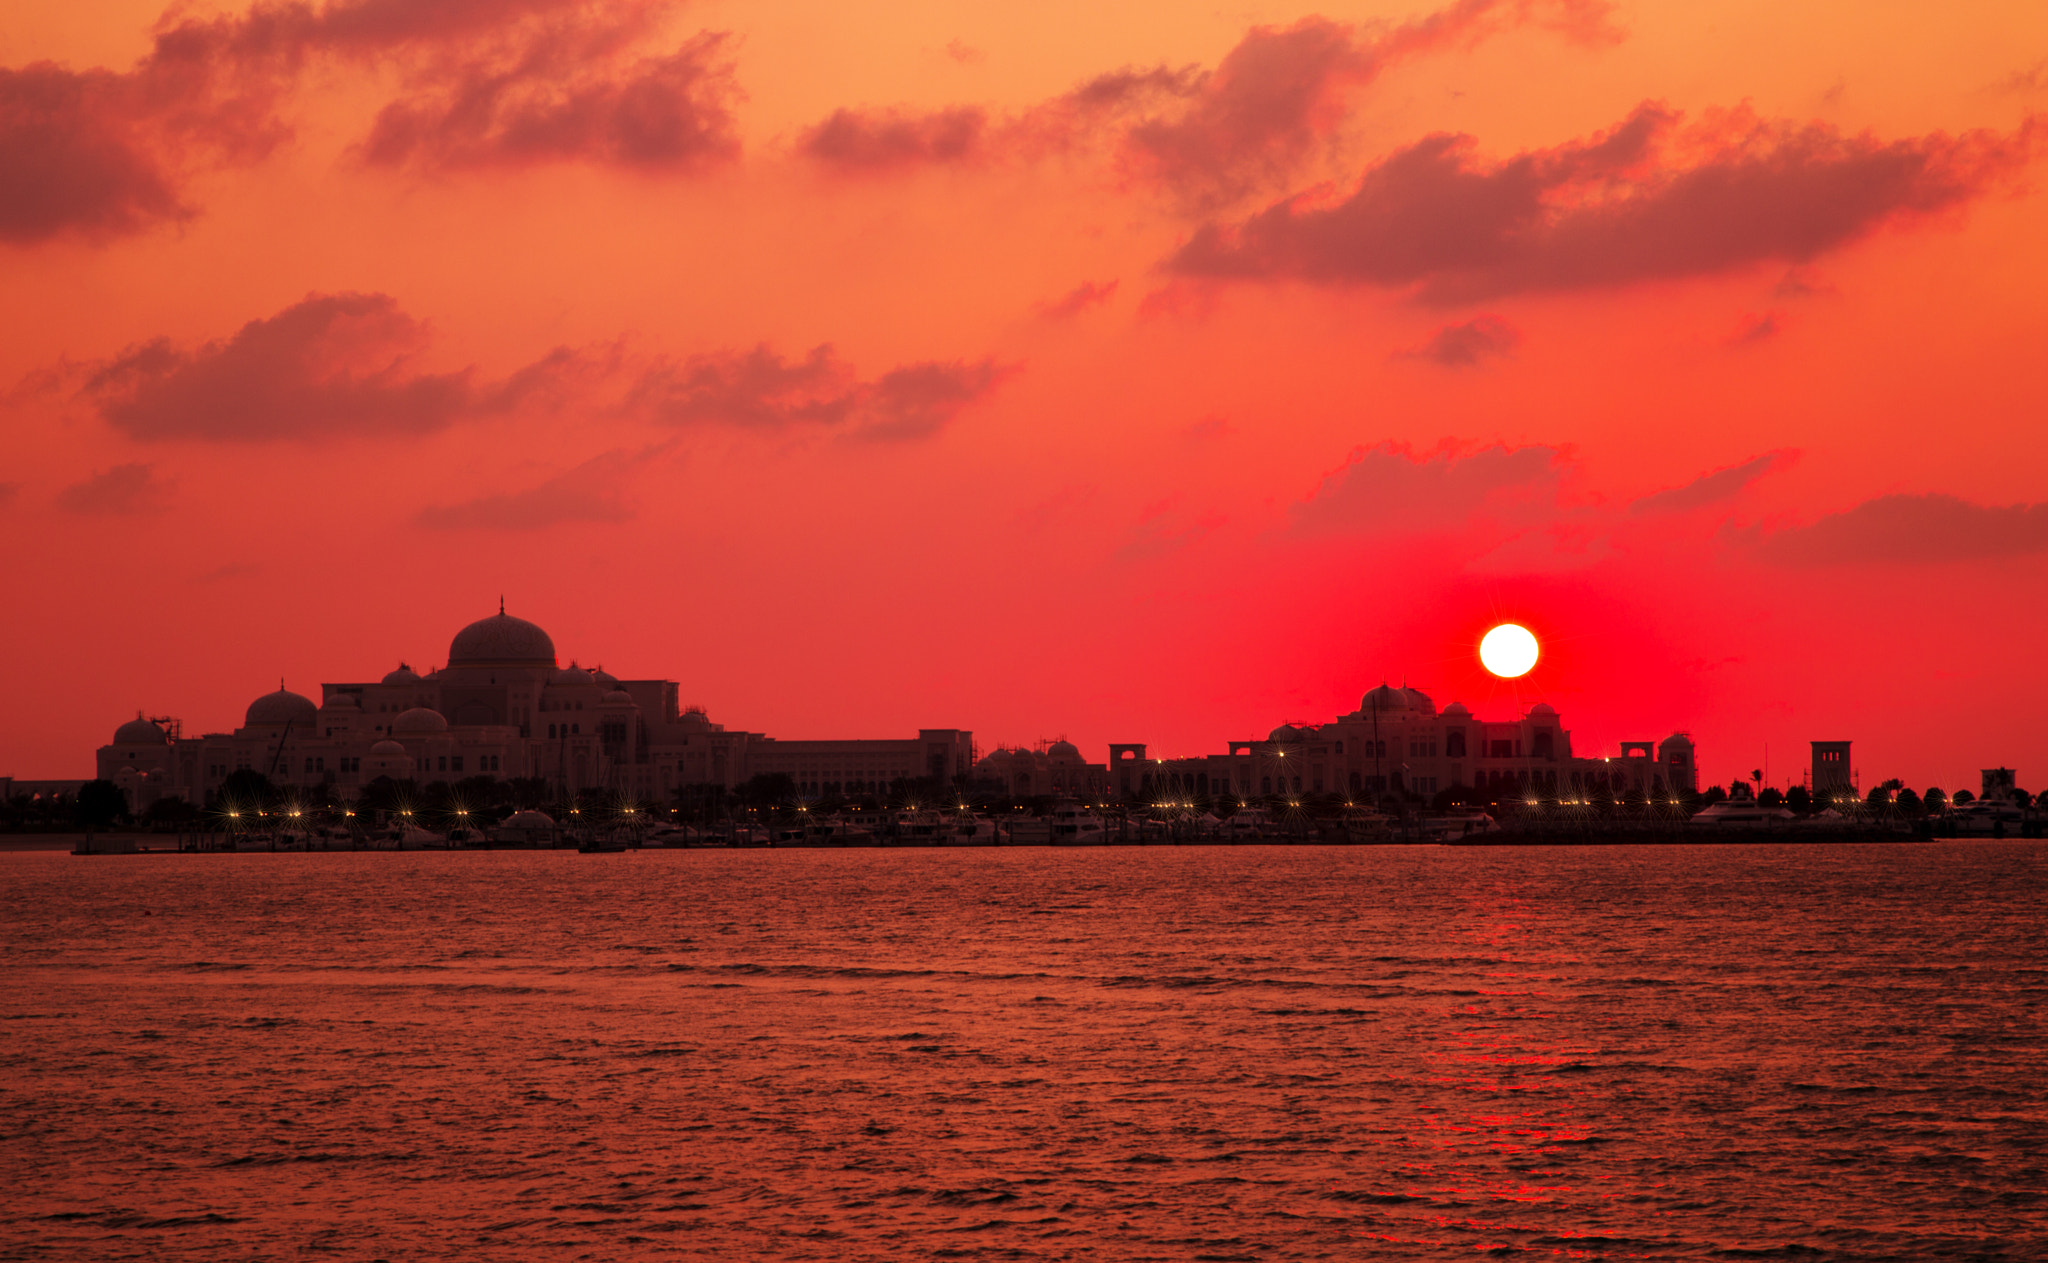 A Beatyful sunset @ Presidential palace Abudhabi